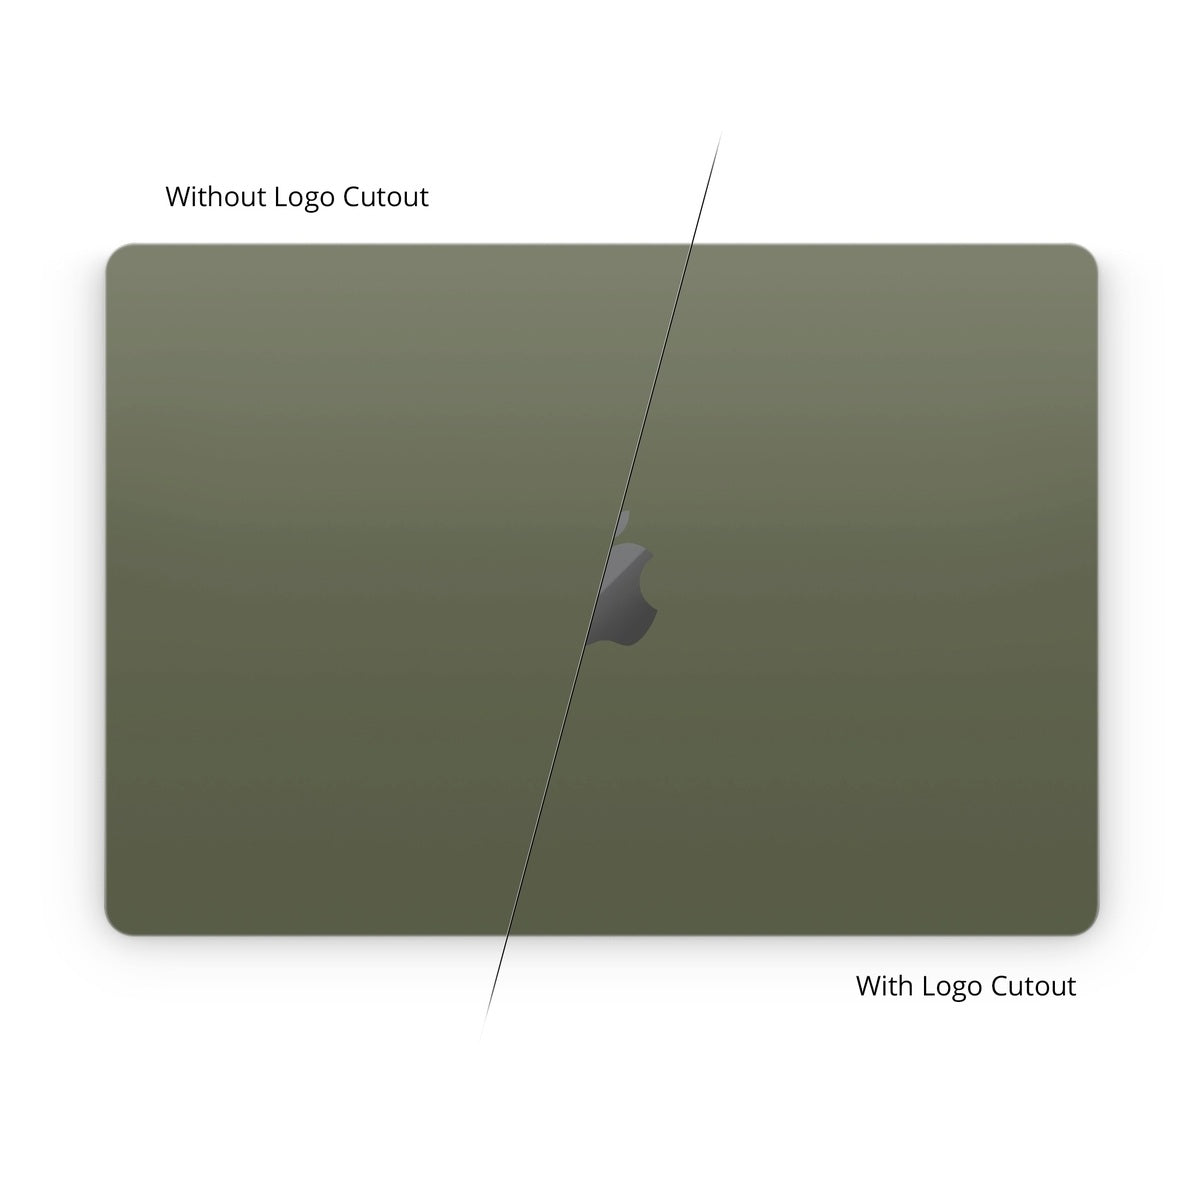 Solid State Olive Drab - Apple MacBook Skin